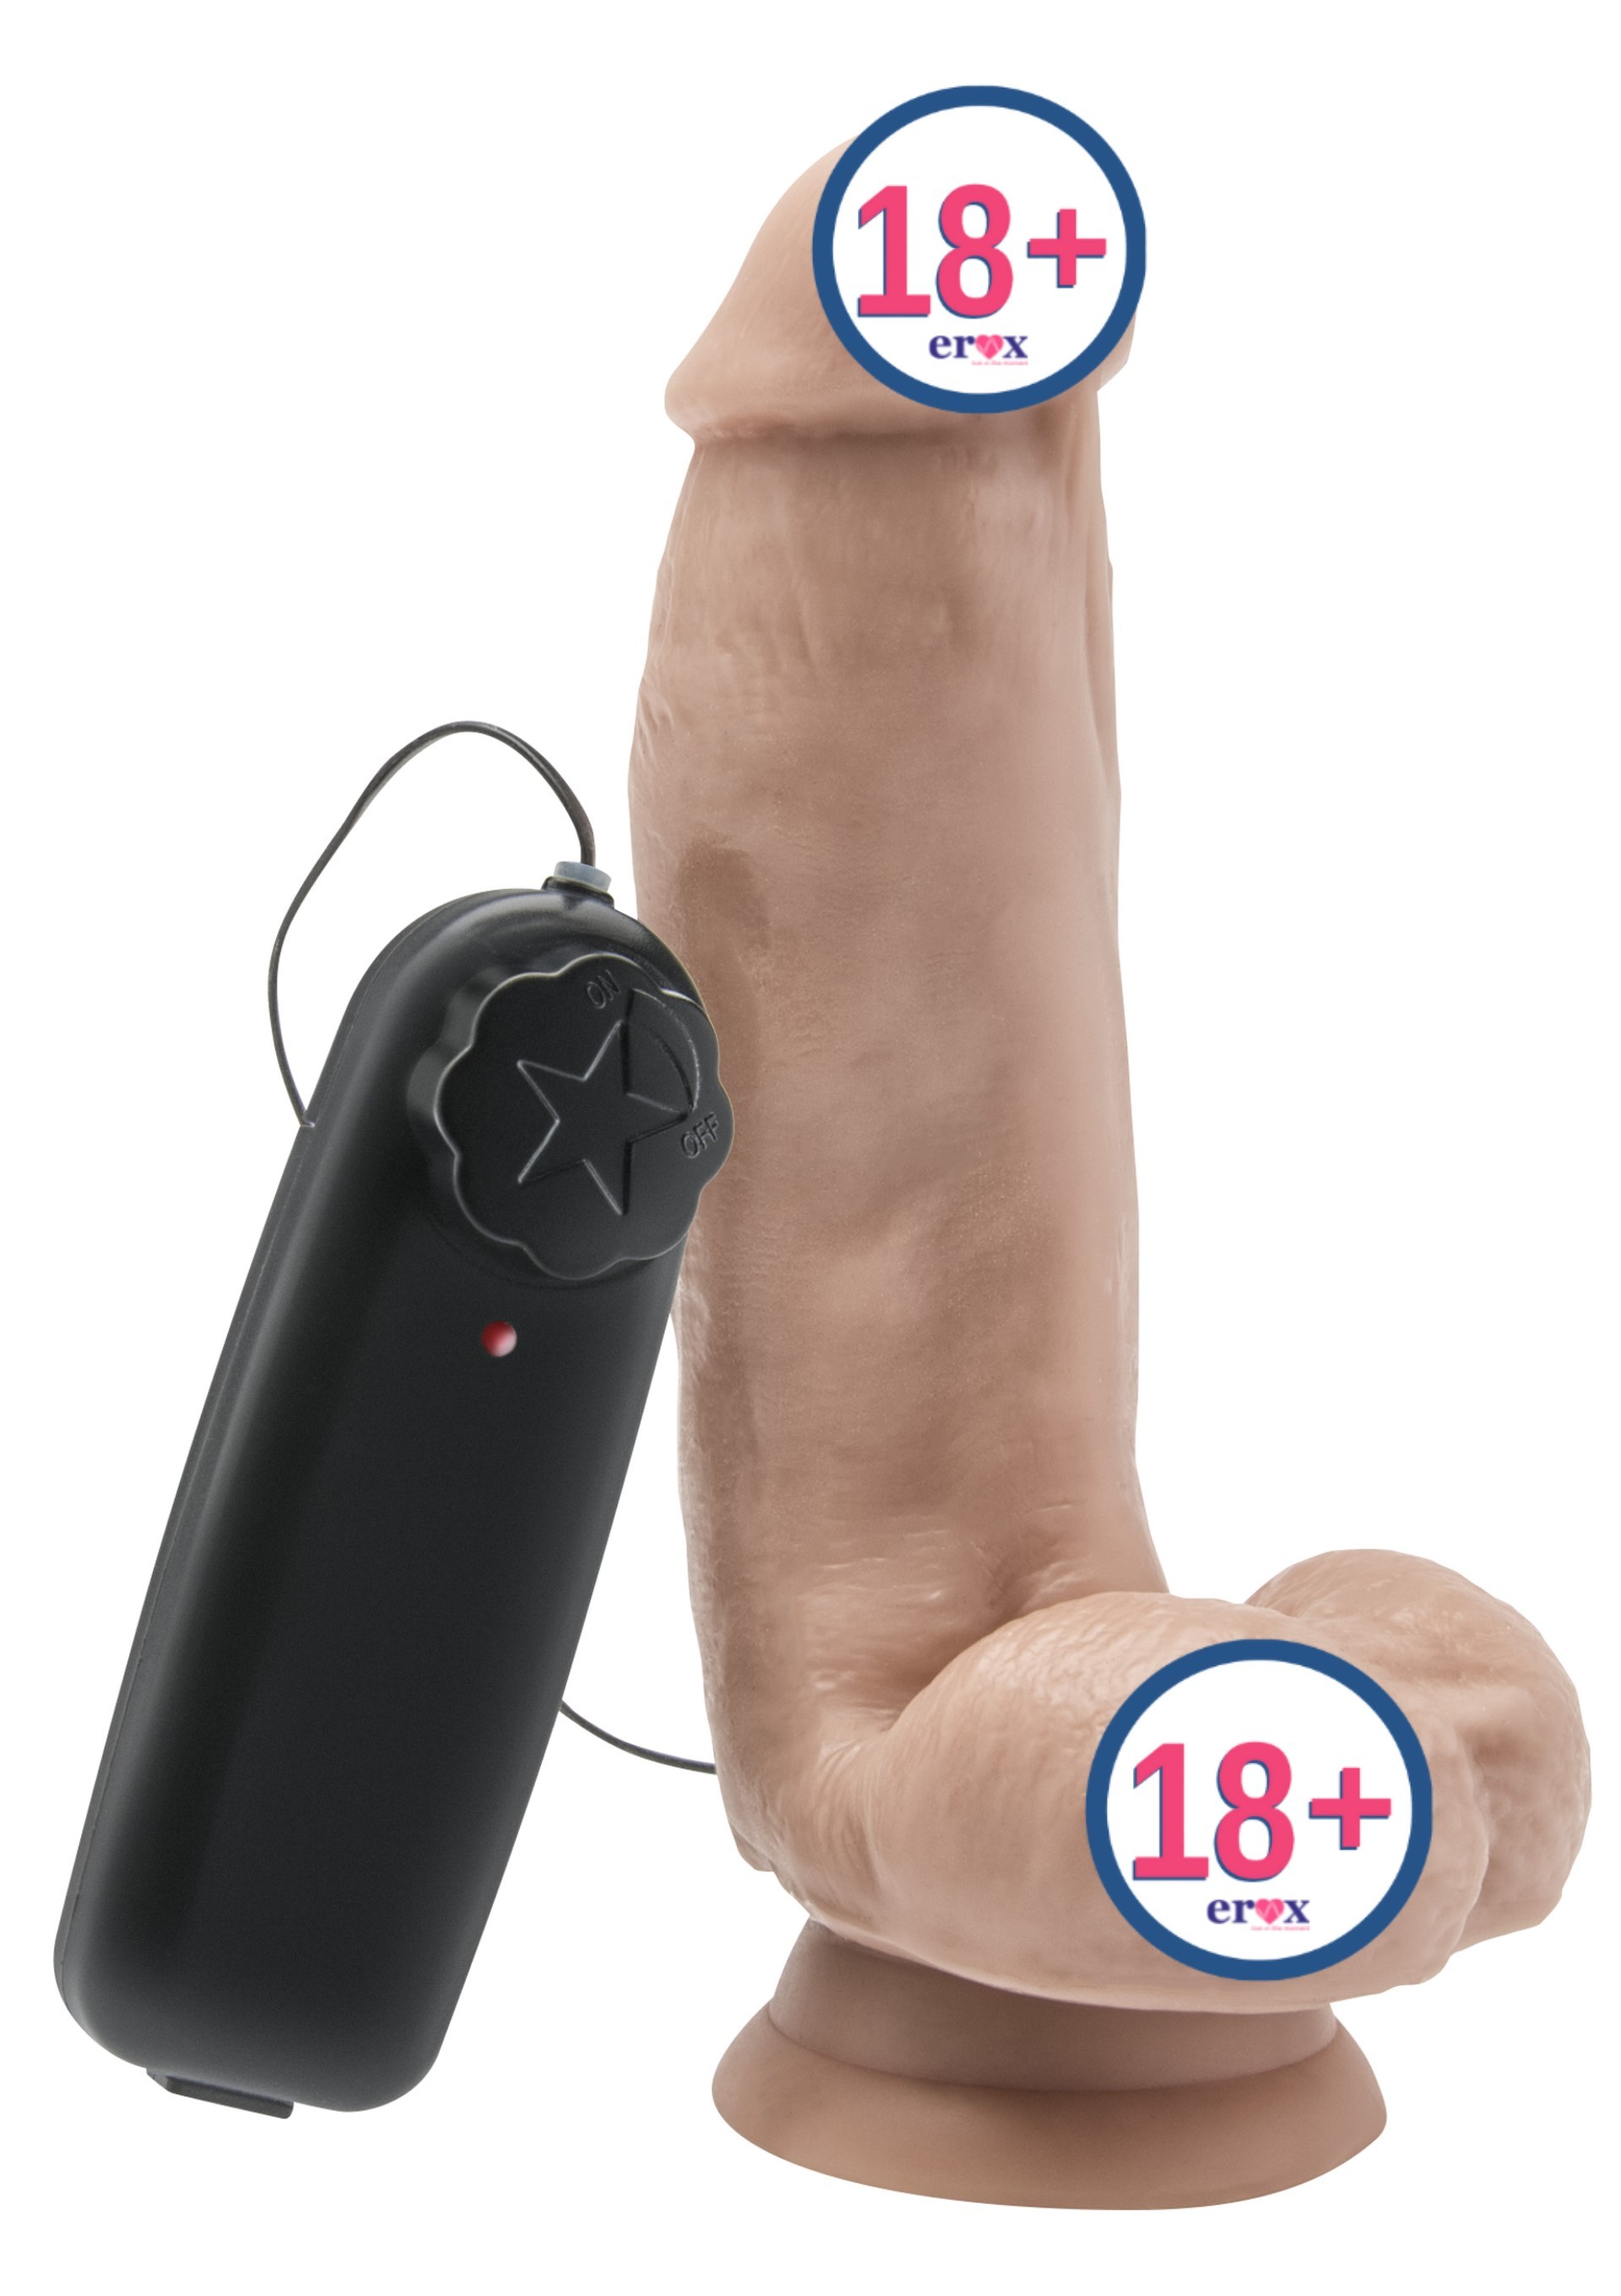 ToyJoy Get Real Titreşimli Realistik Penis 15 cm